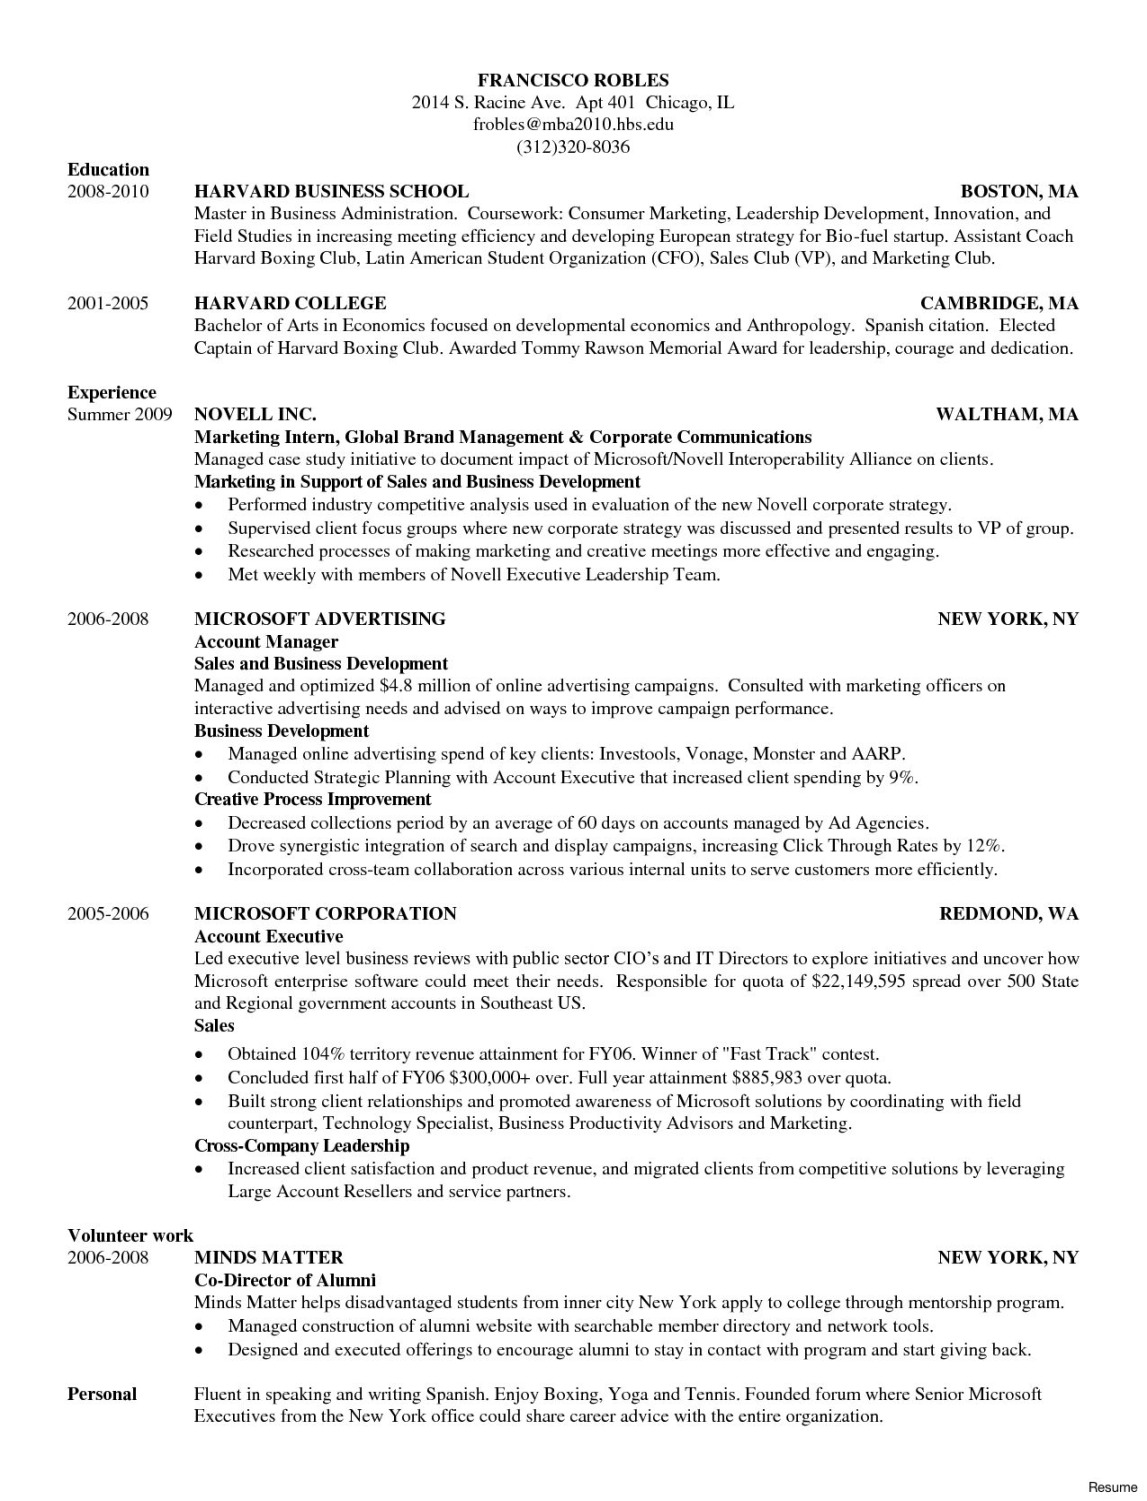 Cv Template Harvard - Resume Format  Nursing resume template